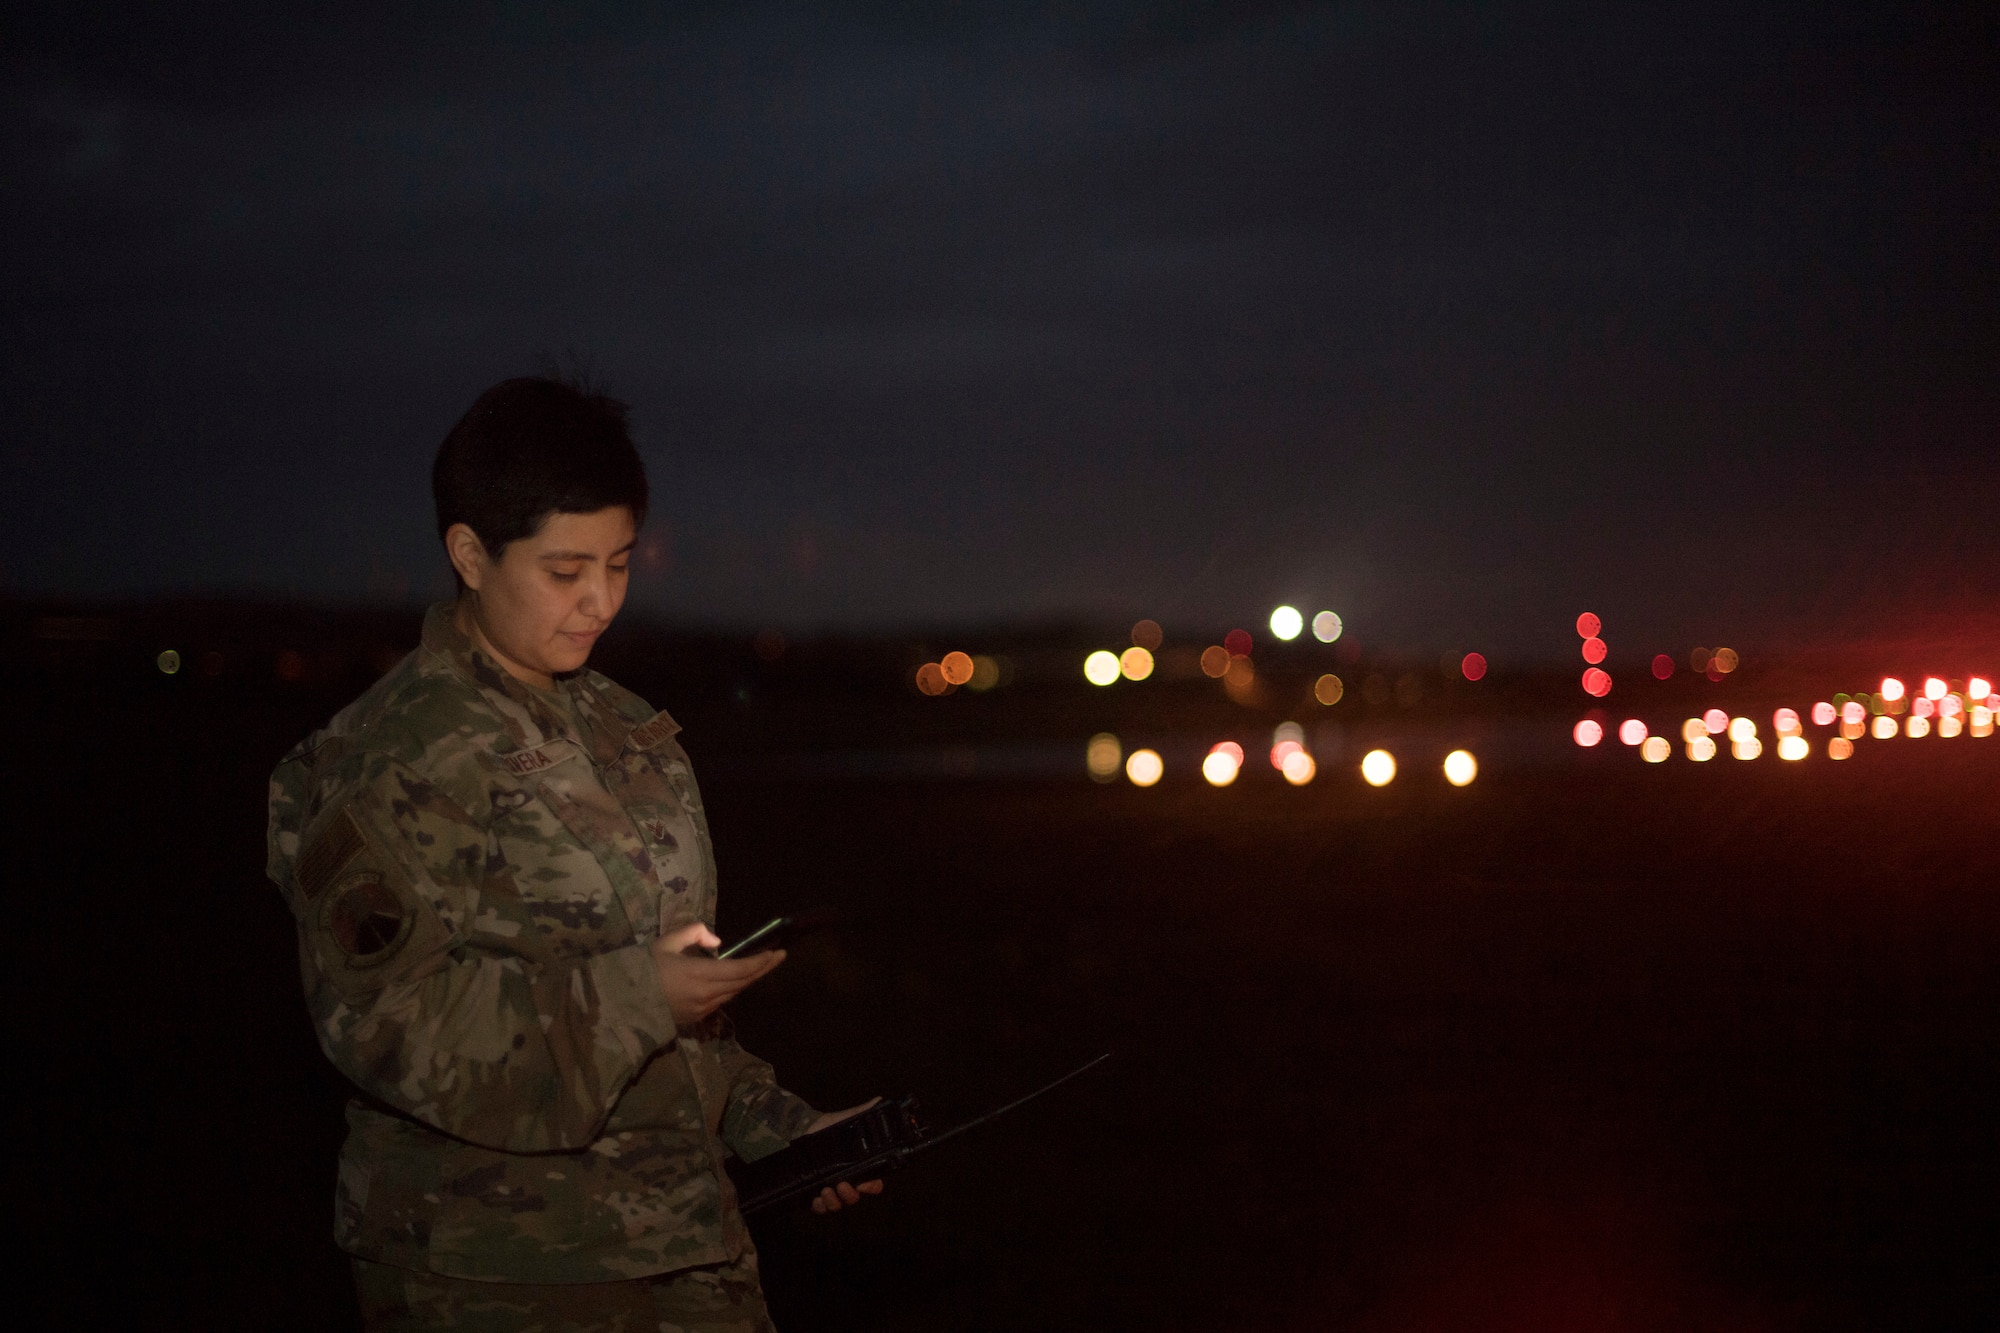 An Airman holding a cell phone.